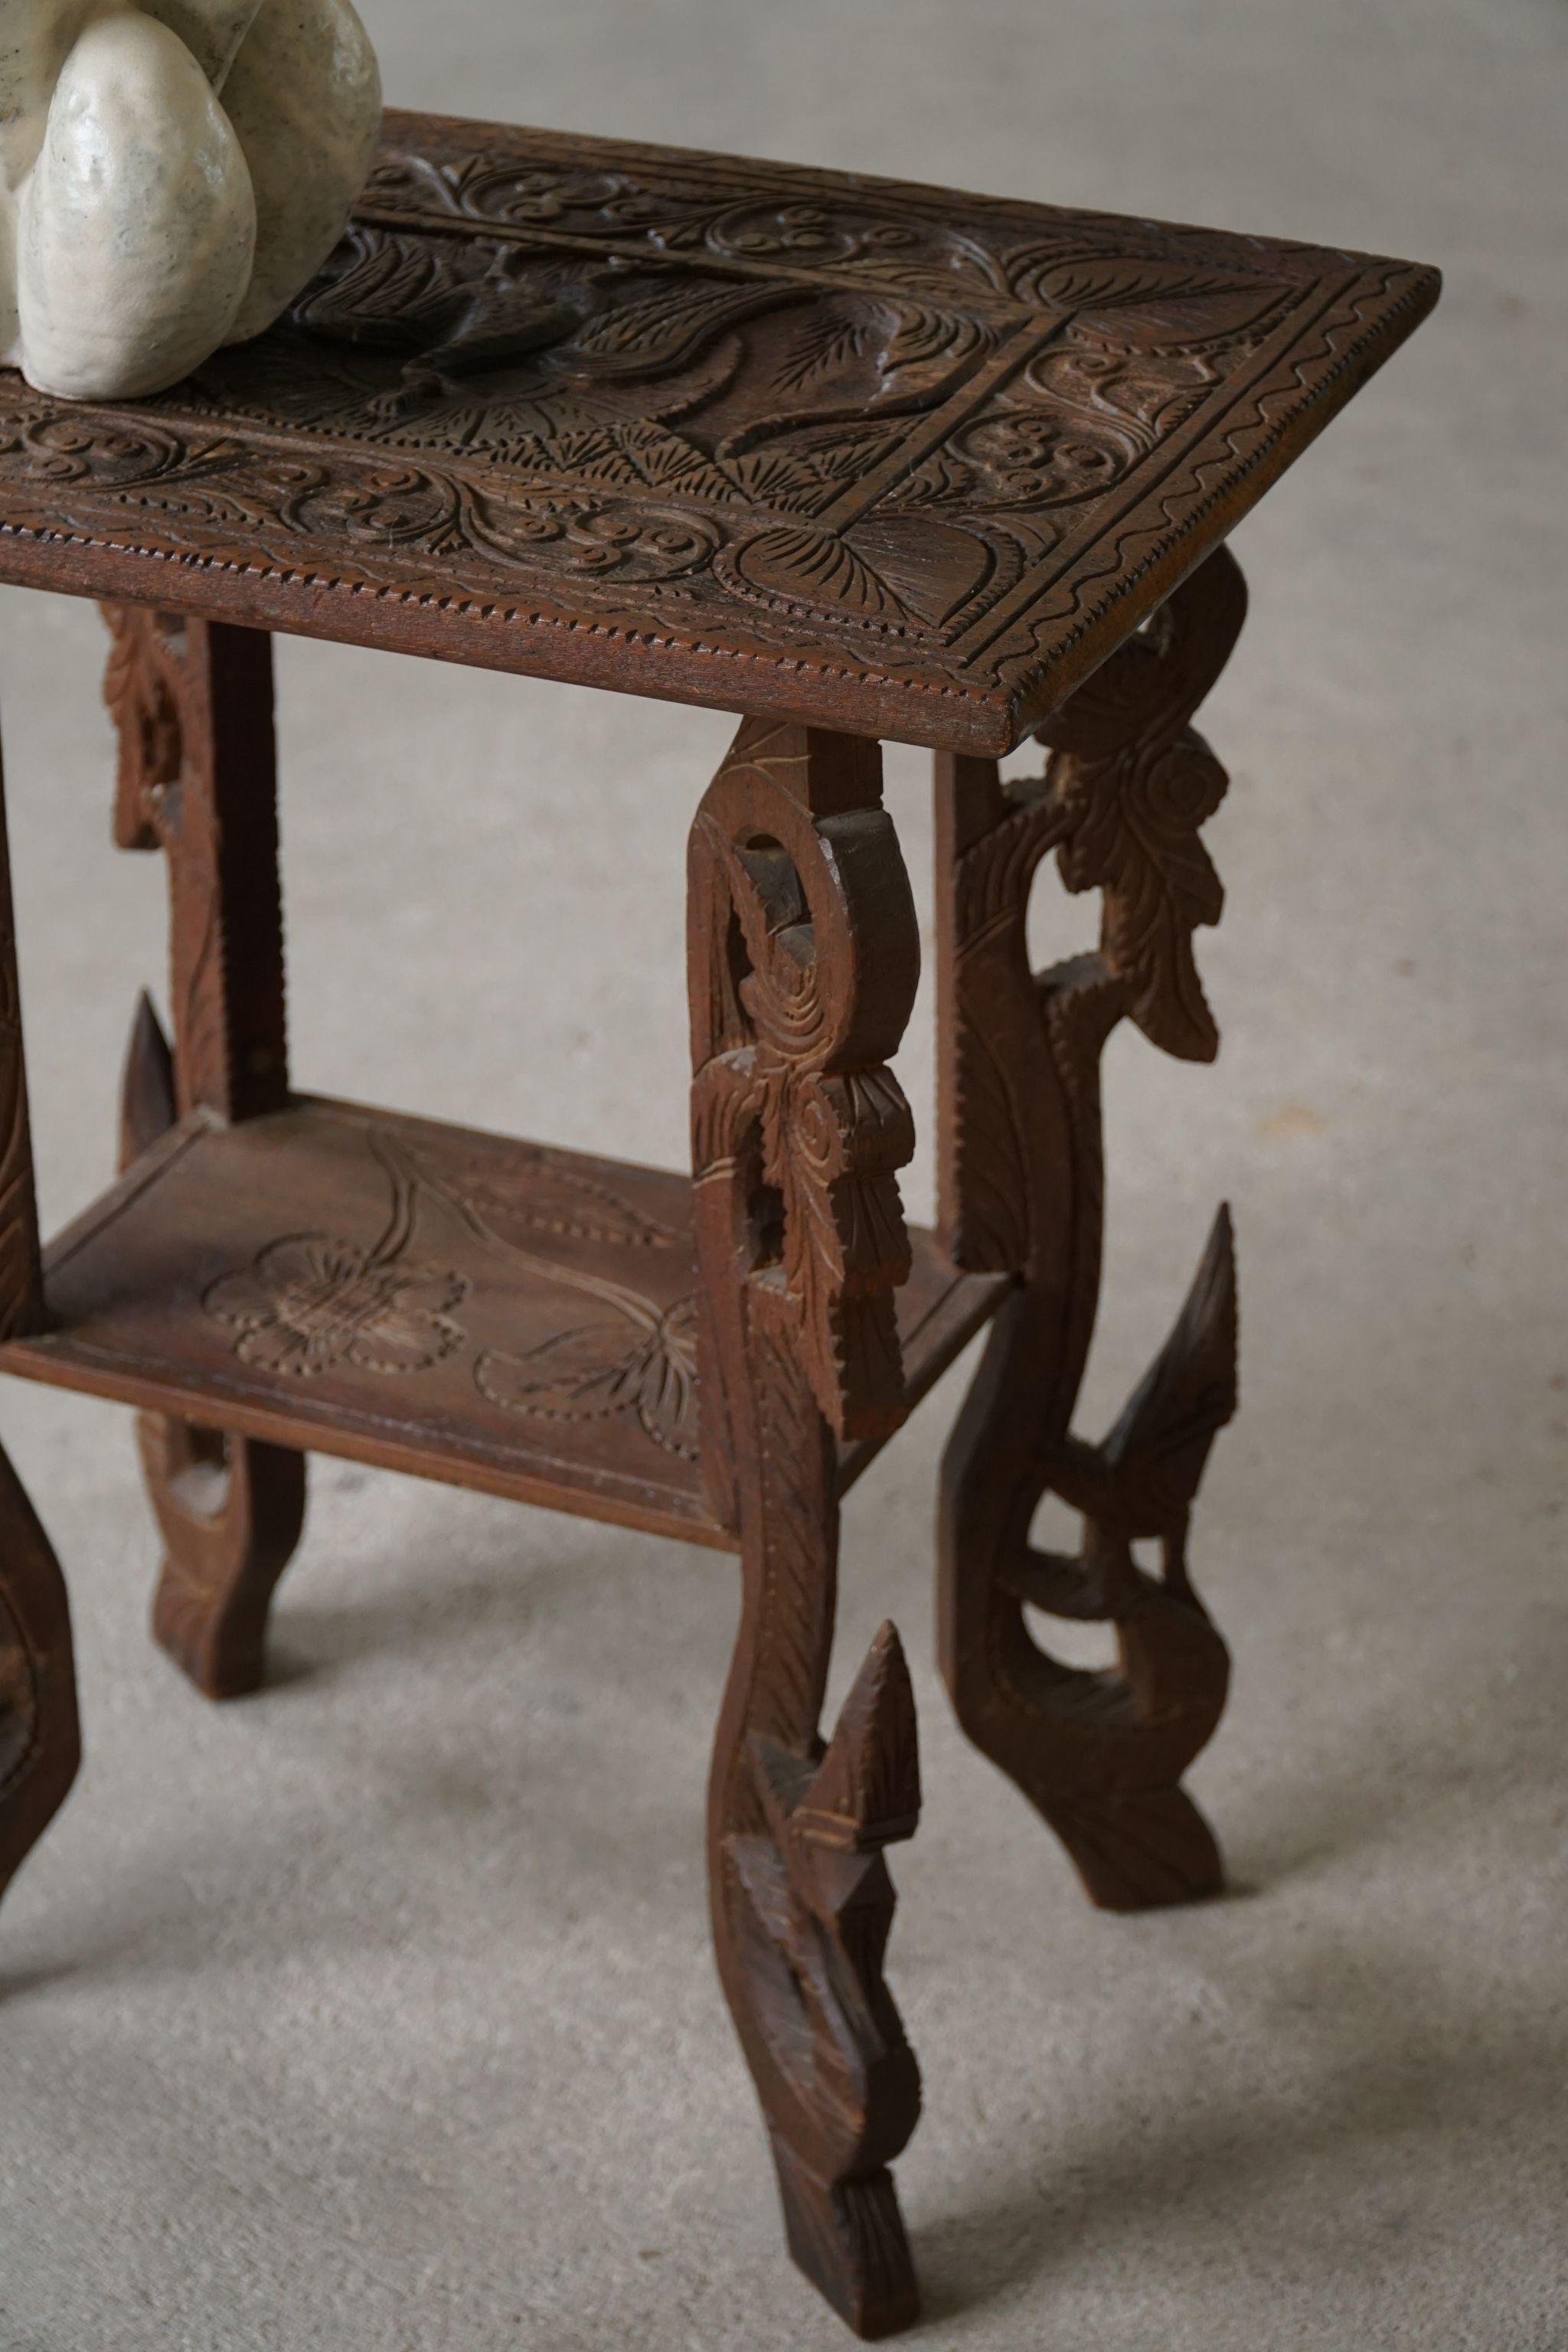 20th century antique furniture leg styles